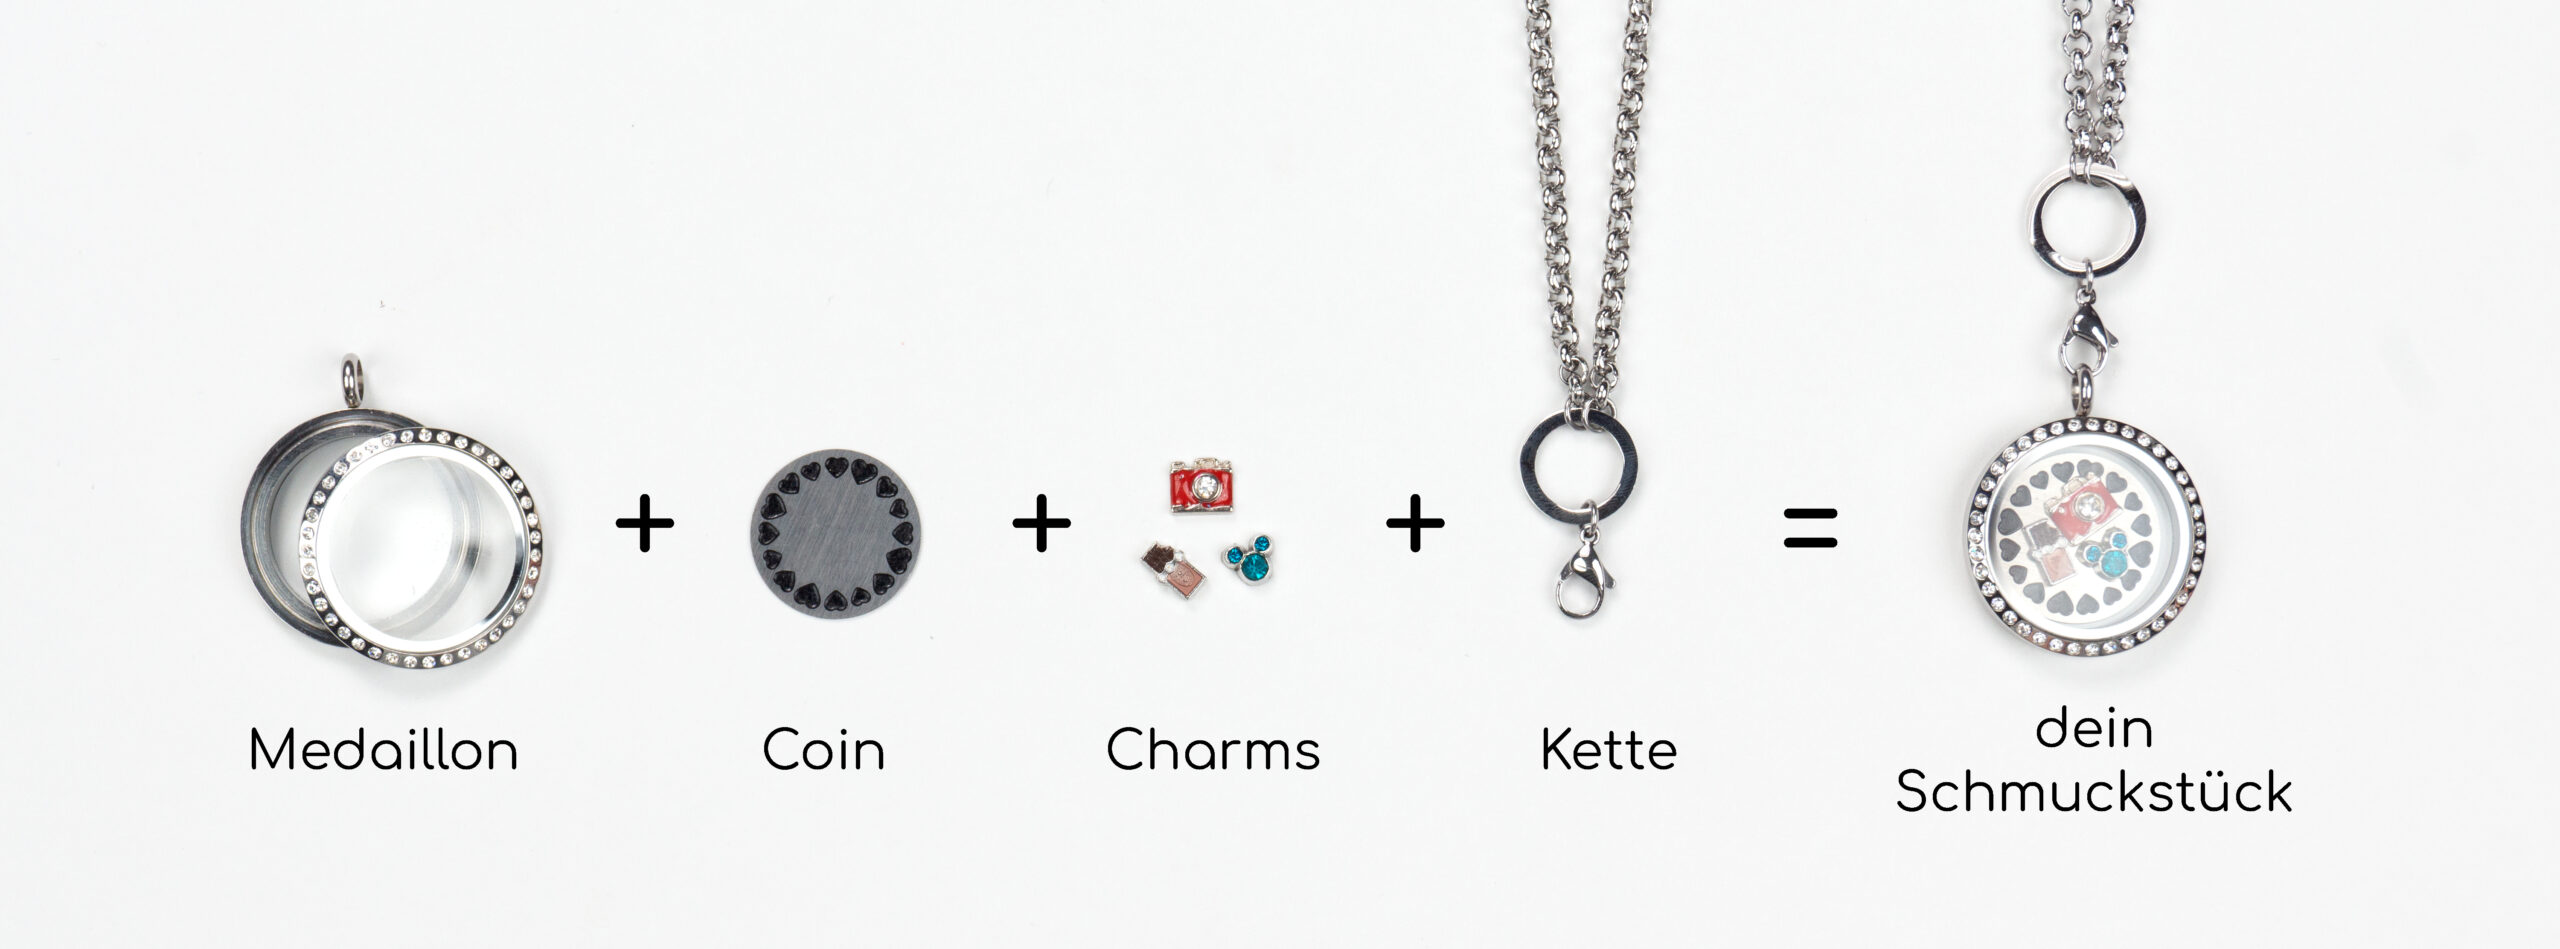 Medaillon + Coin + Charms + Kette = dein Schmuckstück